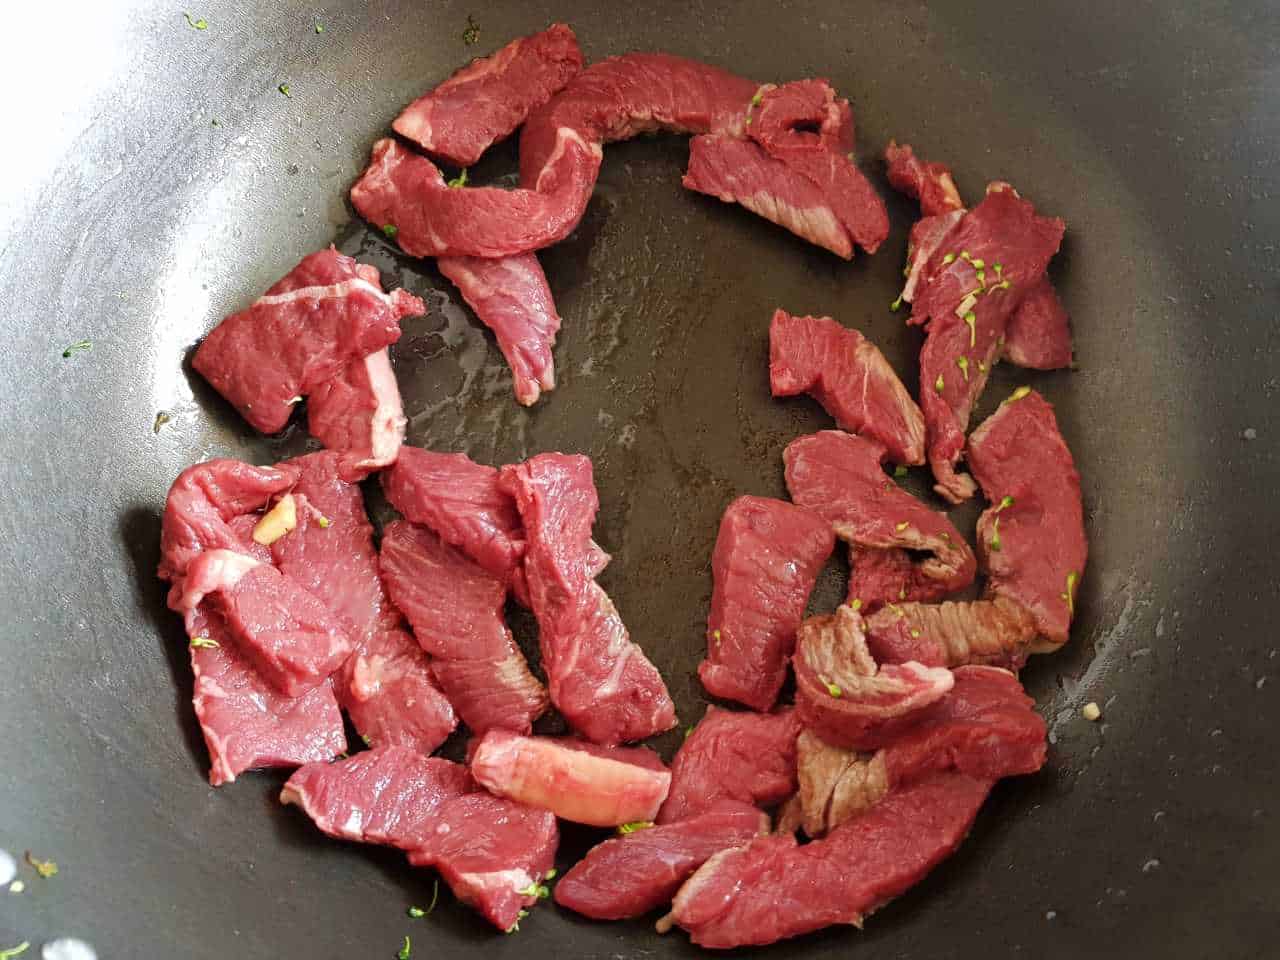 Beef strips in a wok.